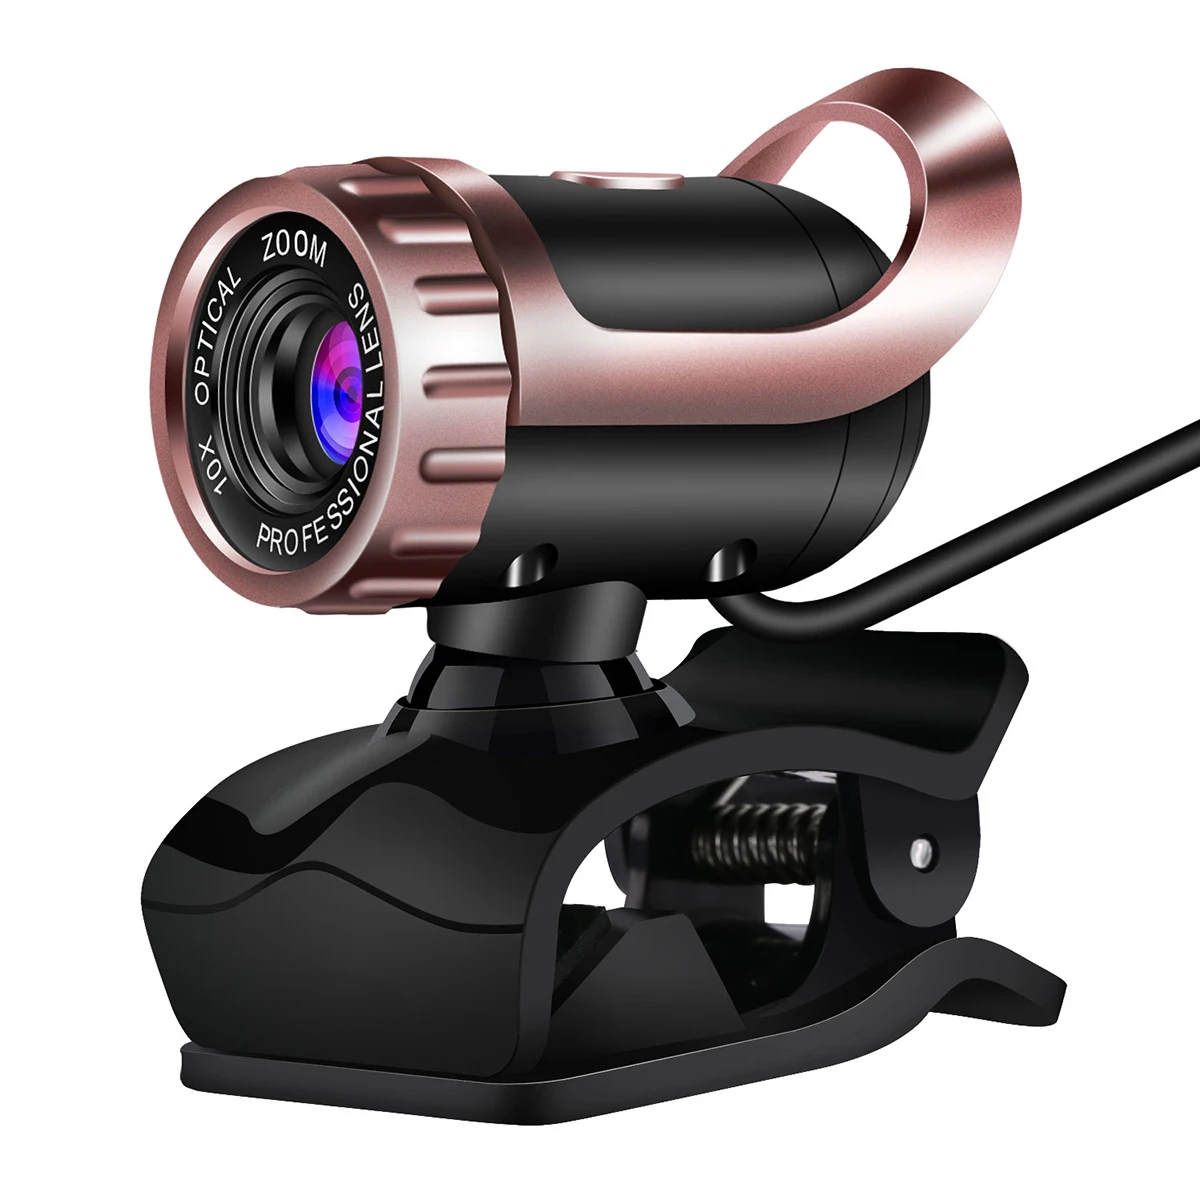 

New Web Camera 480P Webcam USB 2.0 Webcam Web Camera Webcams With Mic For Computer Laptop Desktop PC Dropshipping